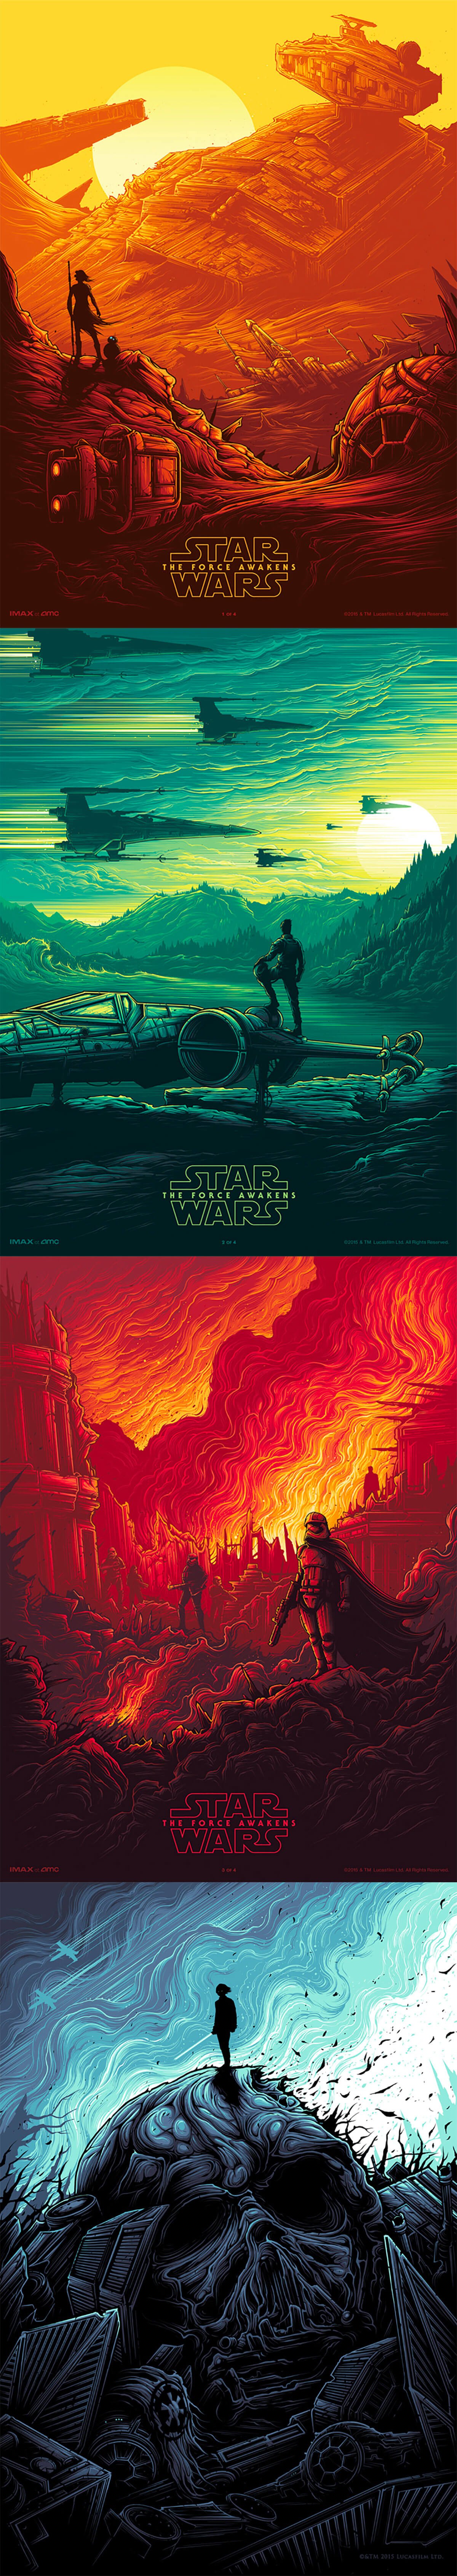 Star Wars Fanart by Dan Mumford